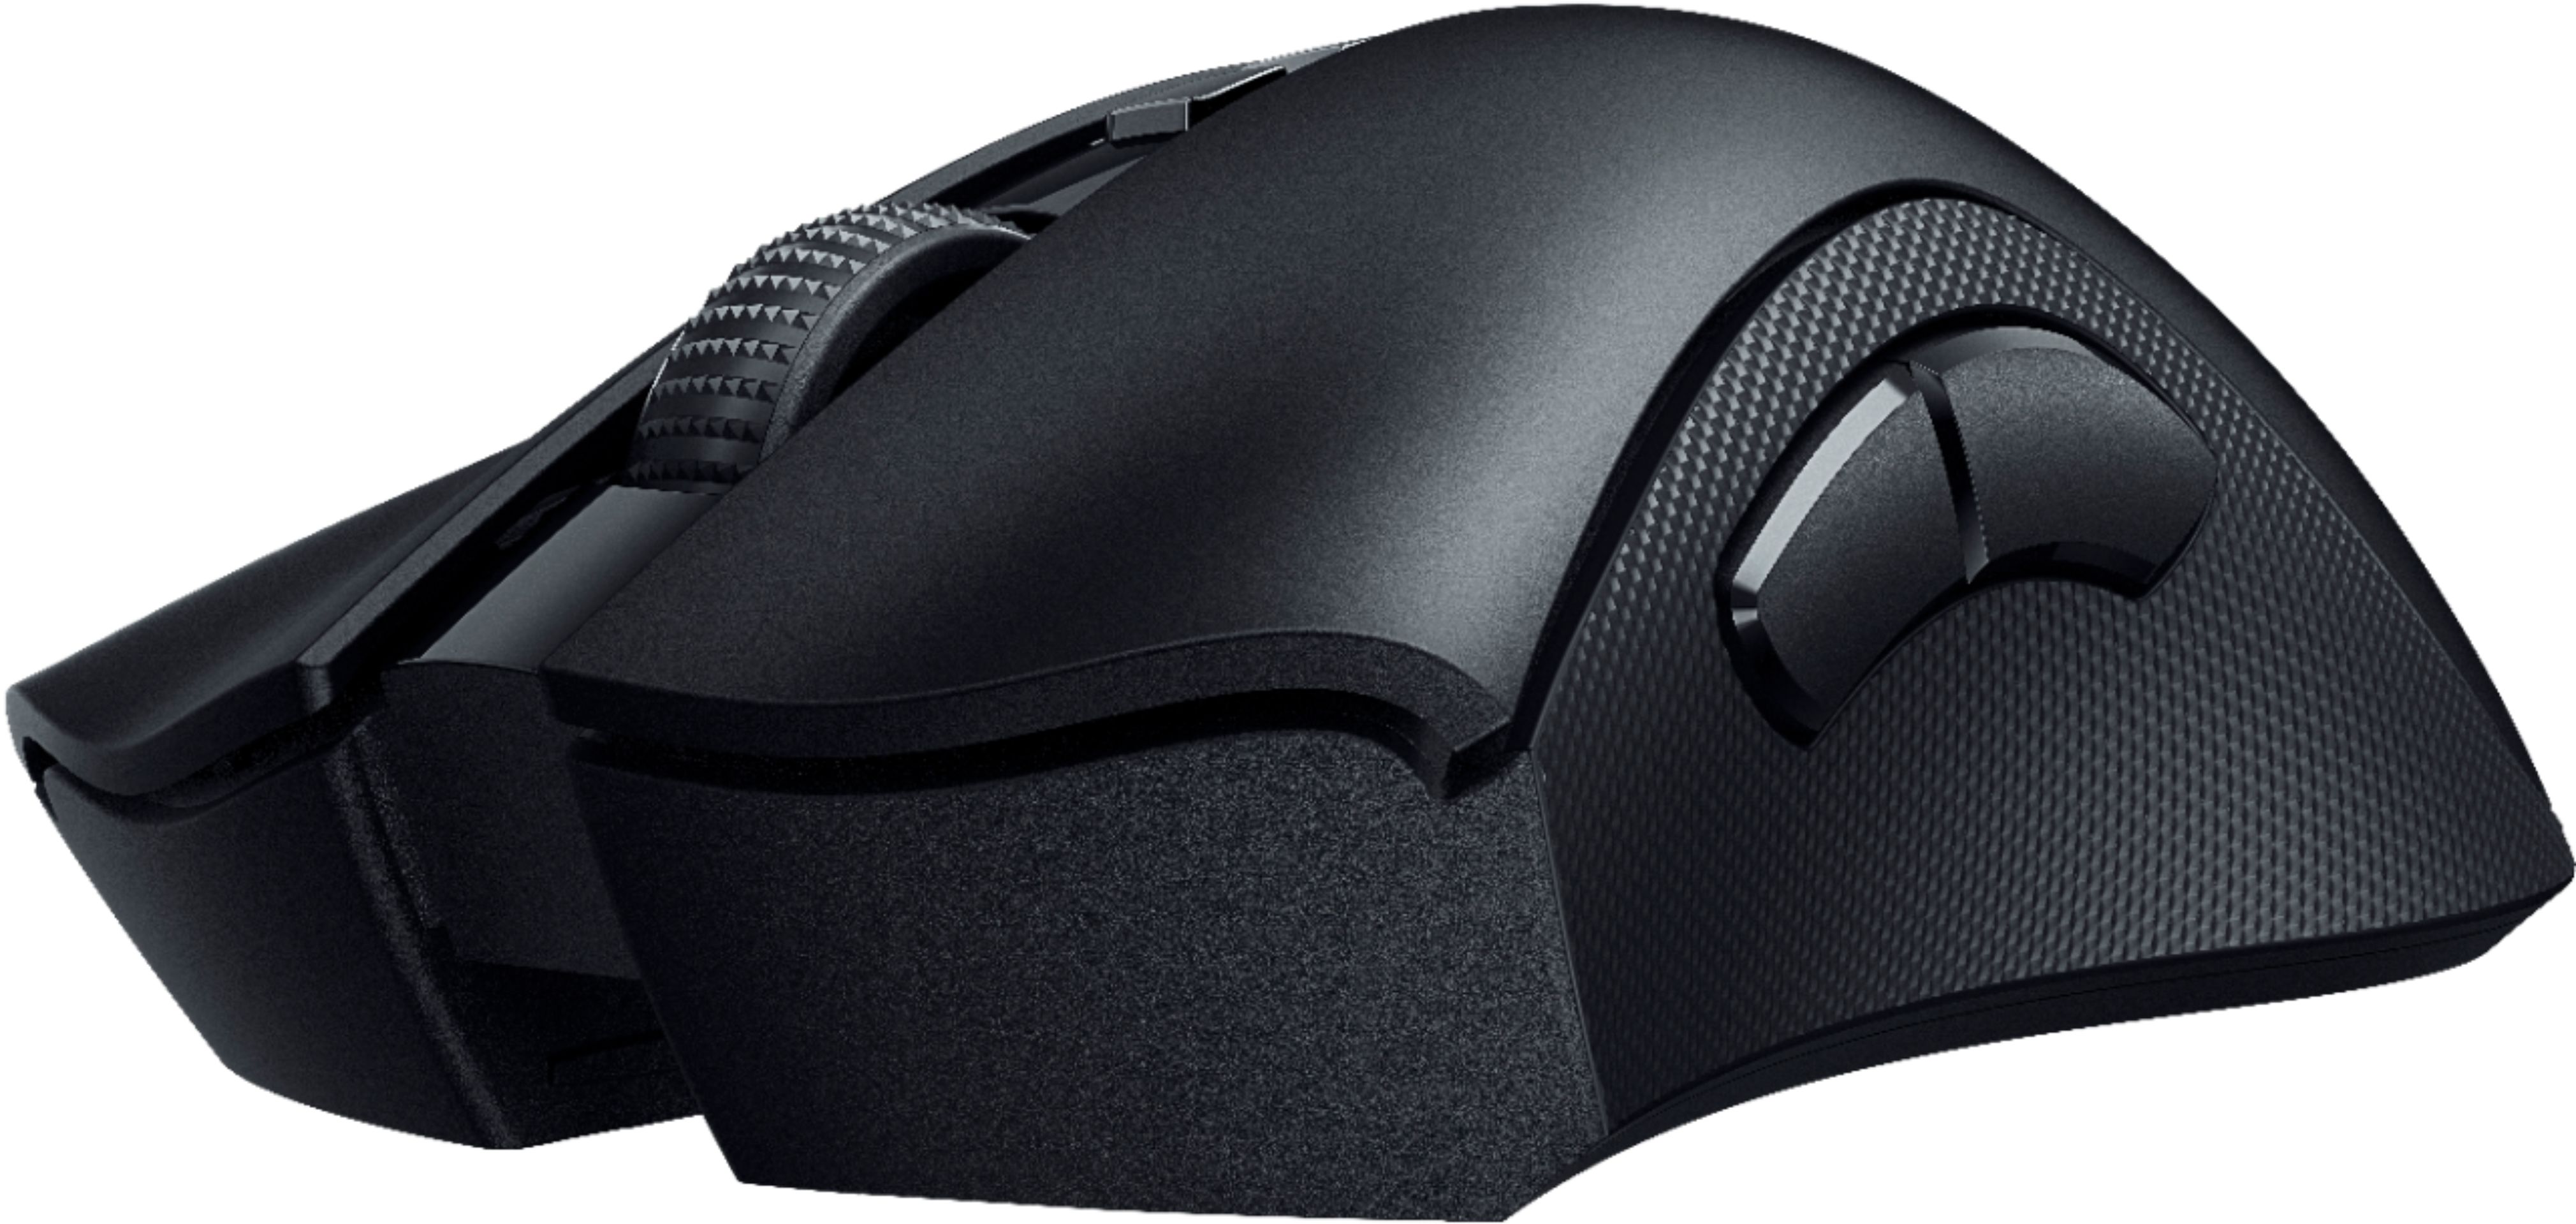 Wireless Ergonomic Gaming Mouse - Razer DeathAdder V2 Pro